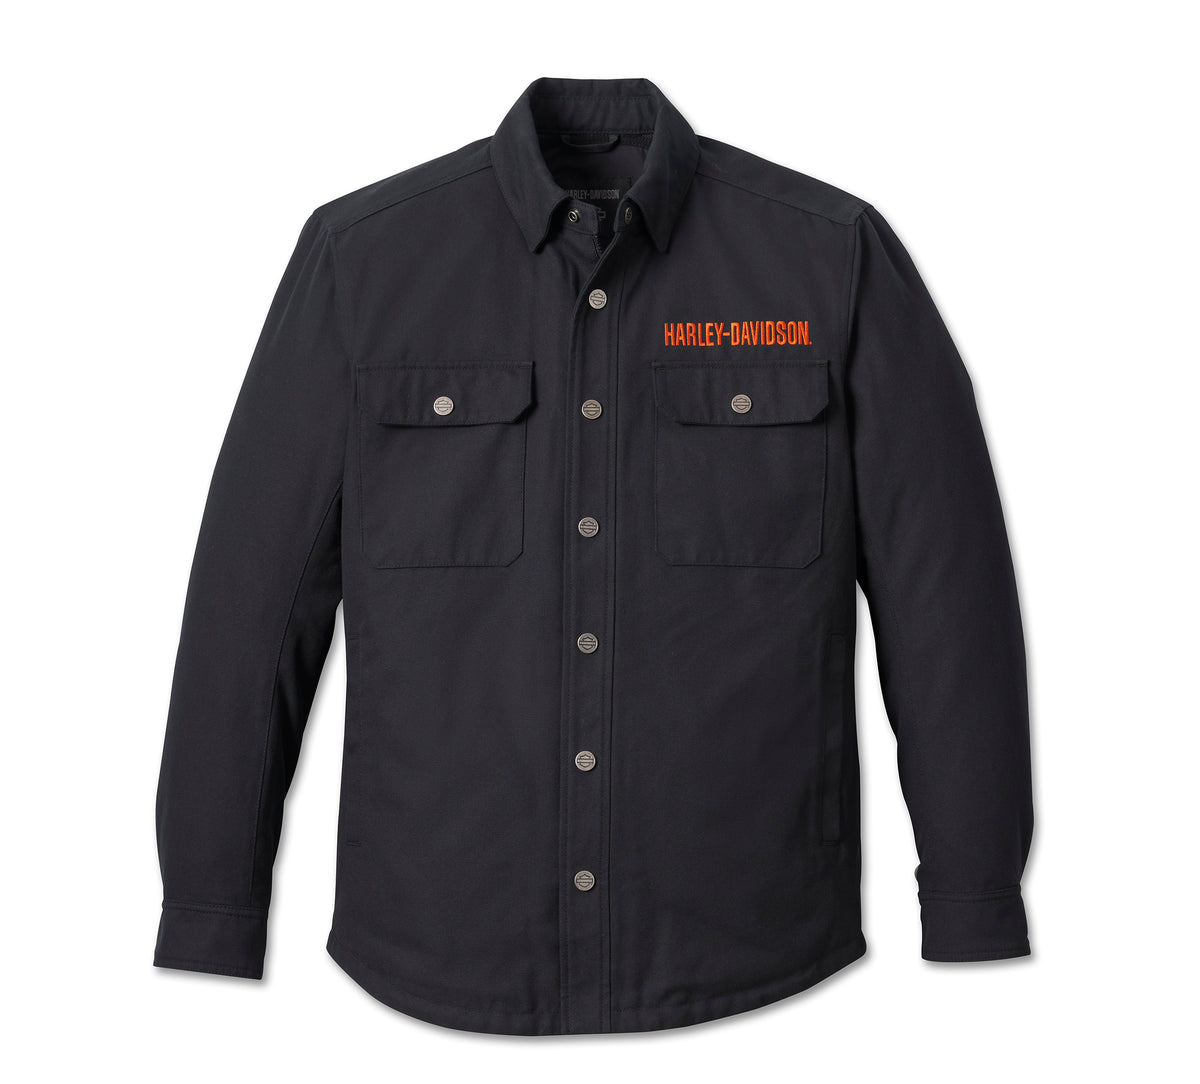 Harley-Davidson Men's Operative Riding Shirt Jacket - Black